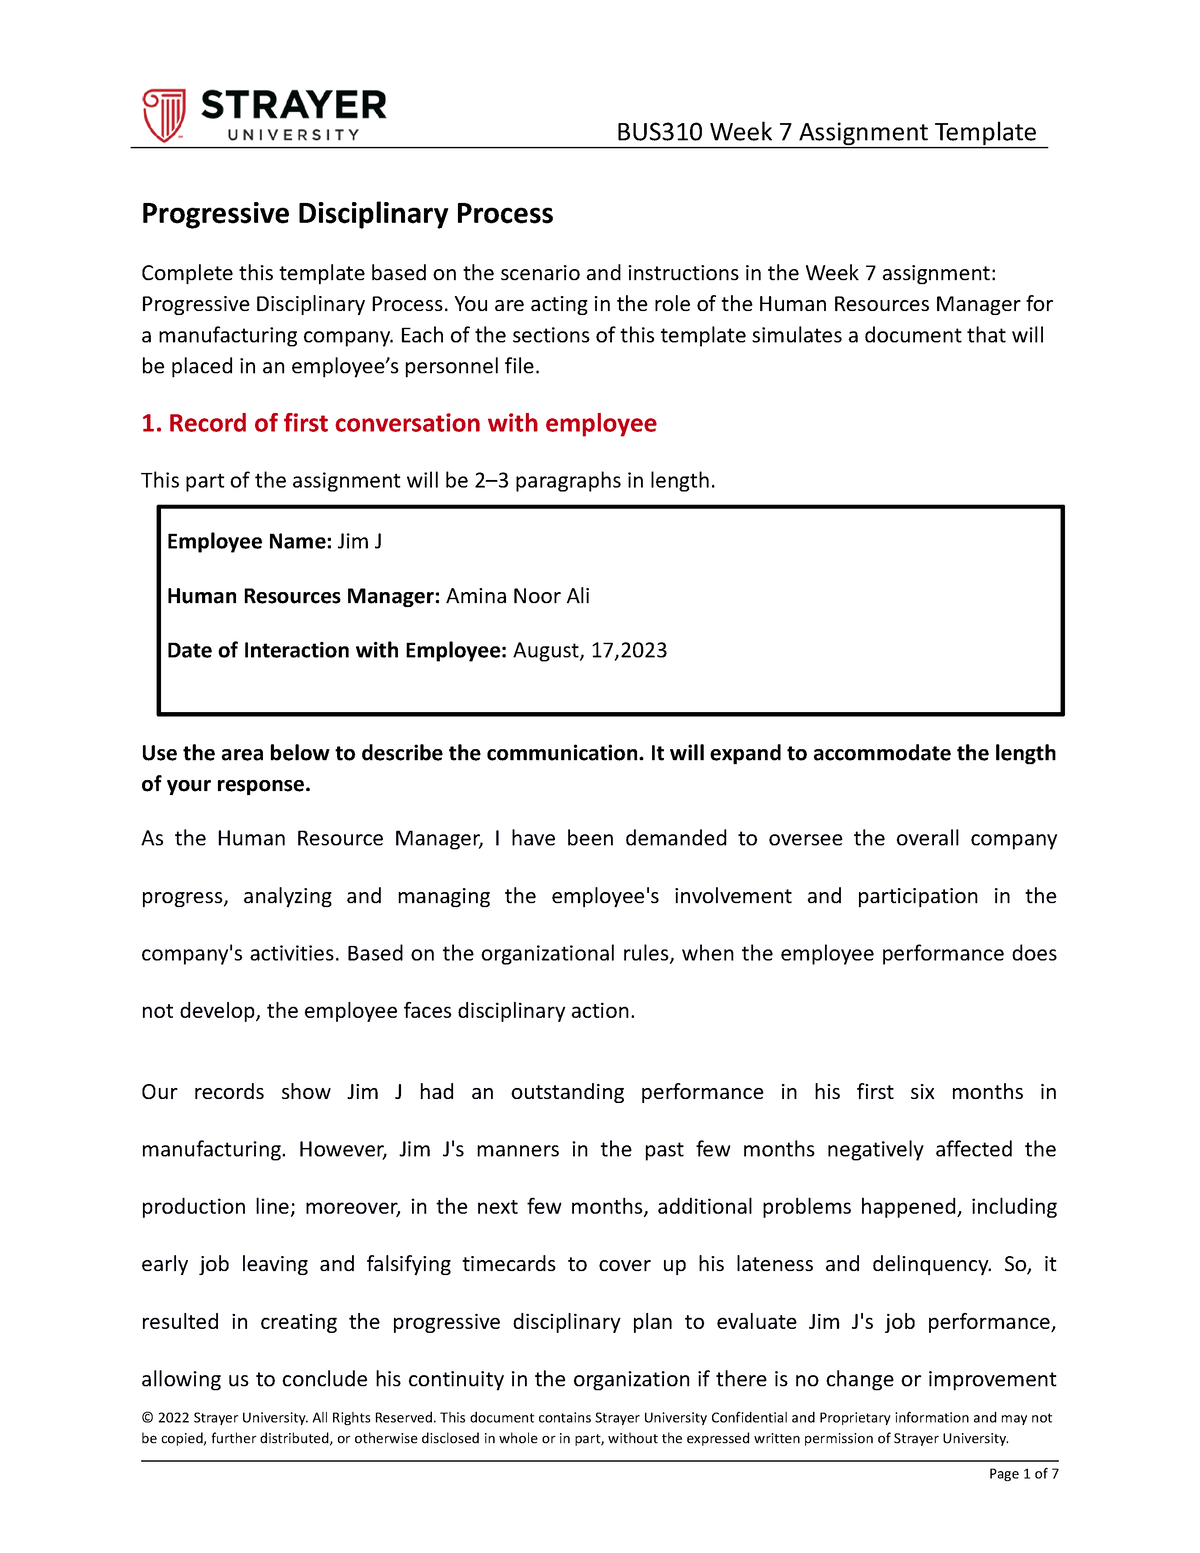 week 7 assignment progressive disciplinary process